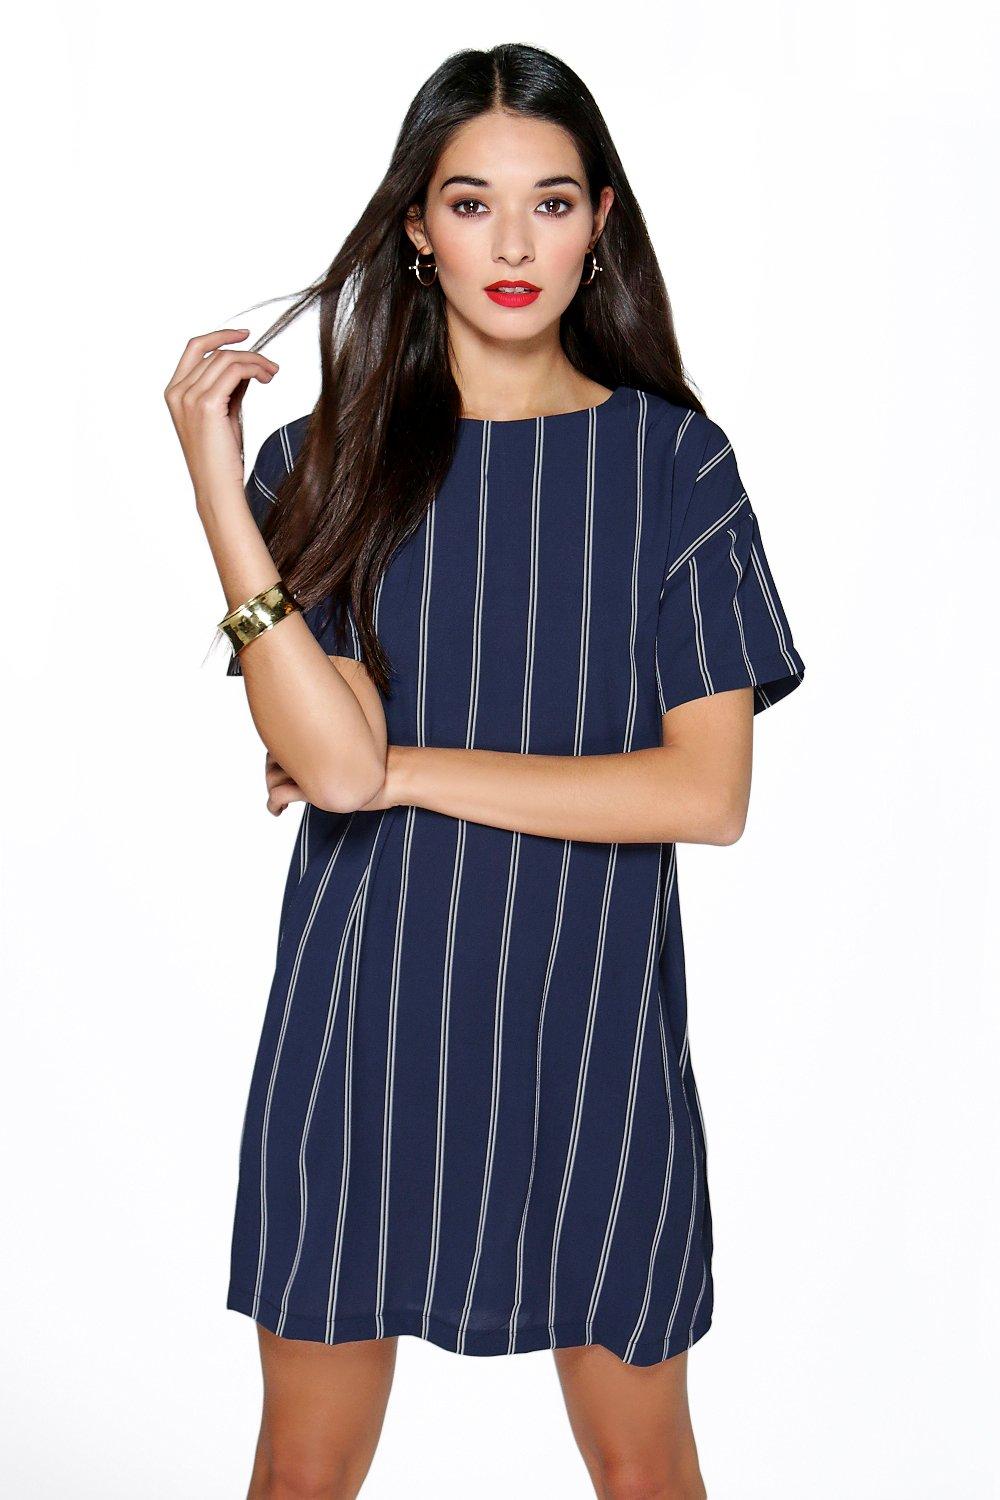 Boohoo Womens Tanya Vertical Stripe Shift Dress | eBay